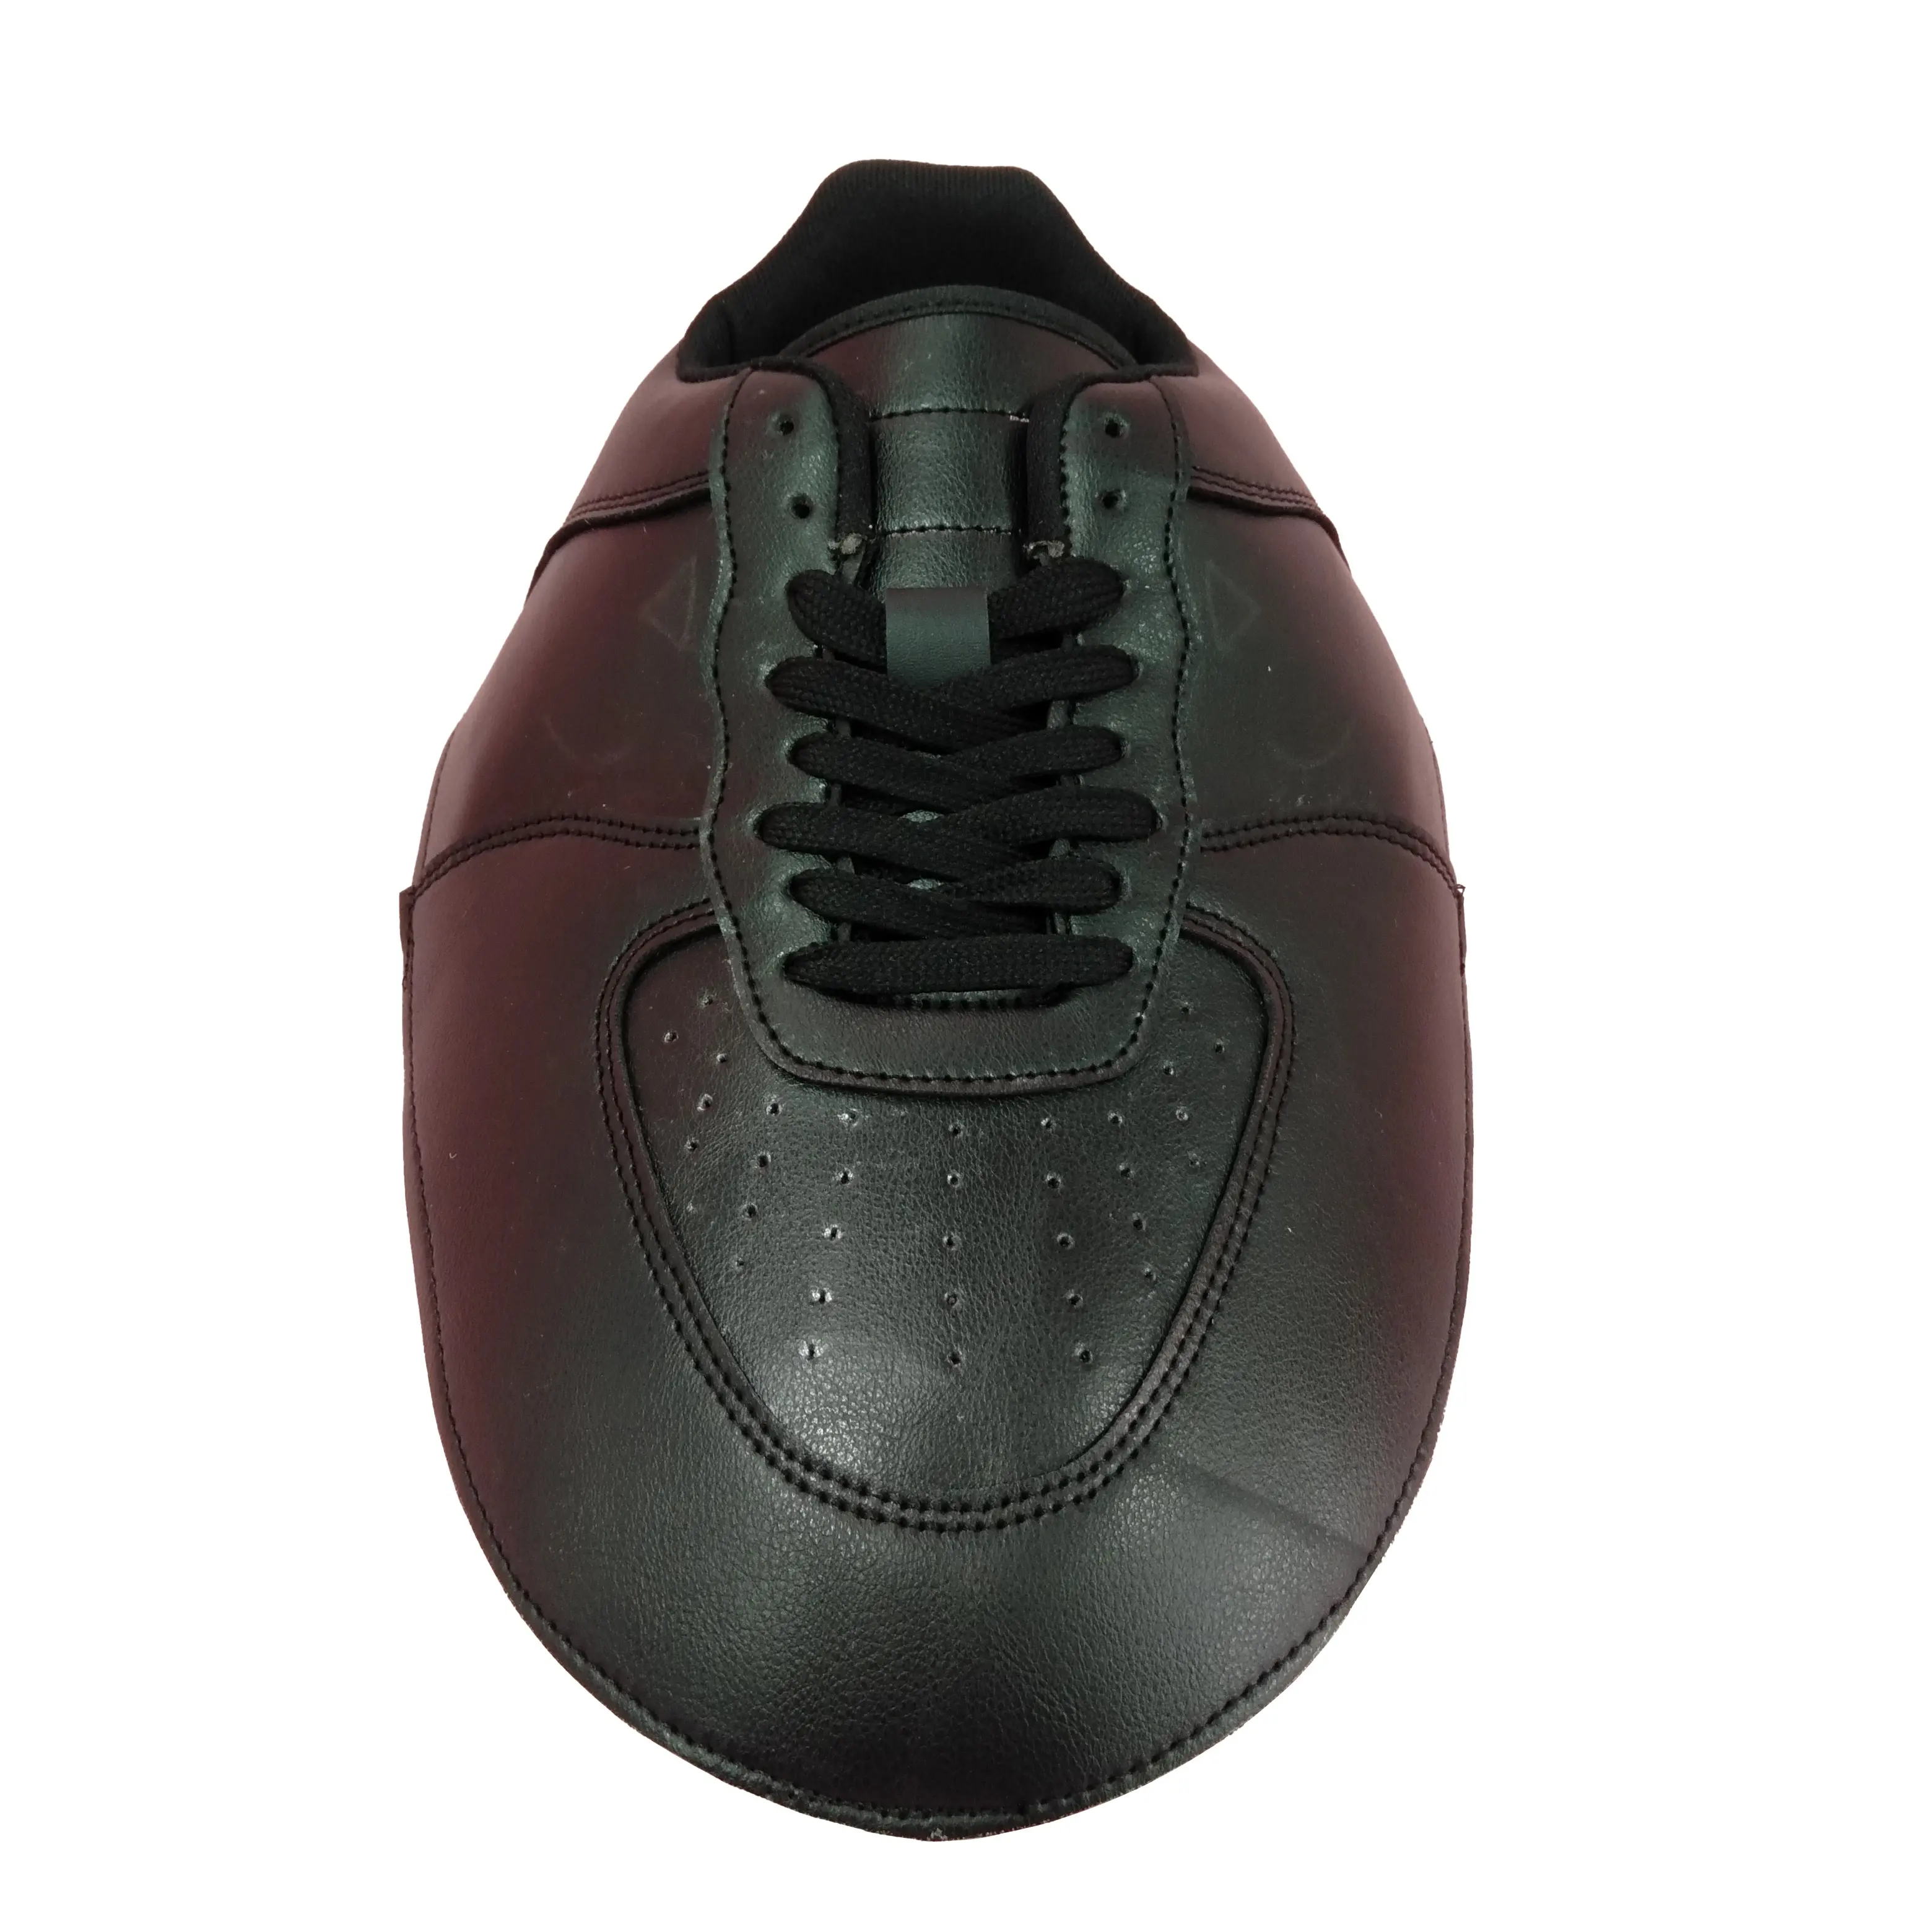 Zapatos de cuero con acabado superior para hombre, material para calzado, hecho en china